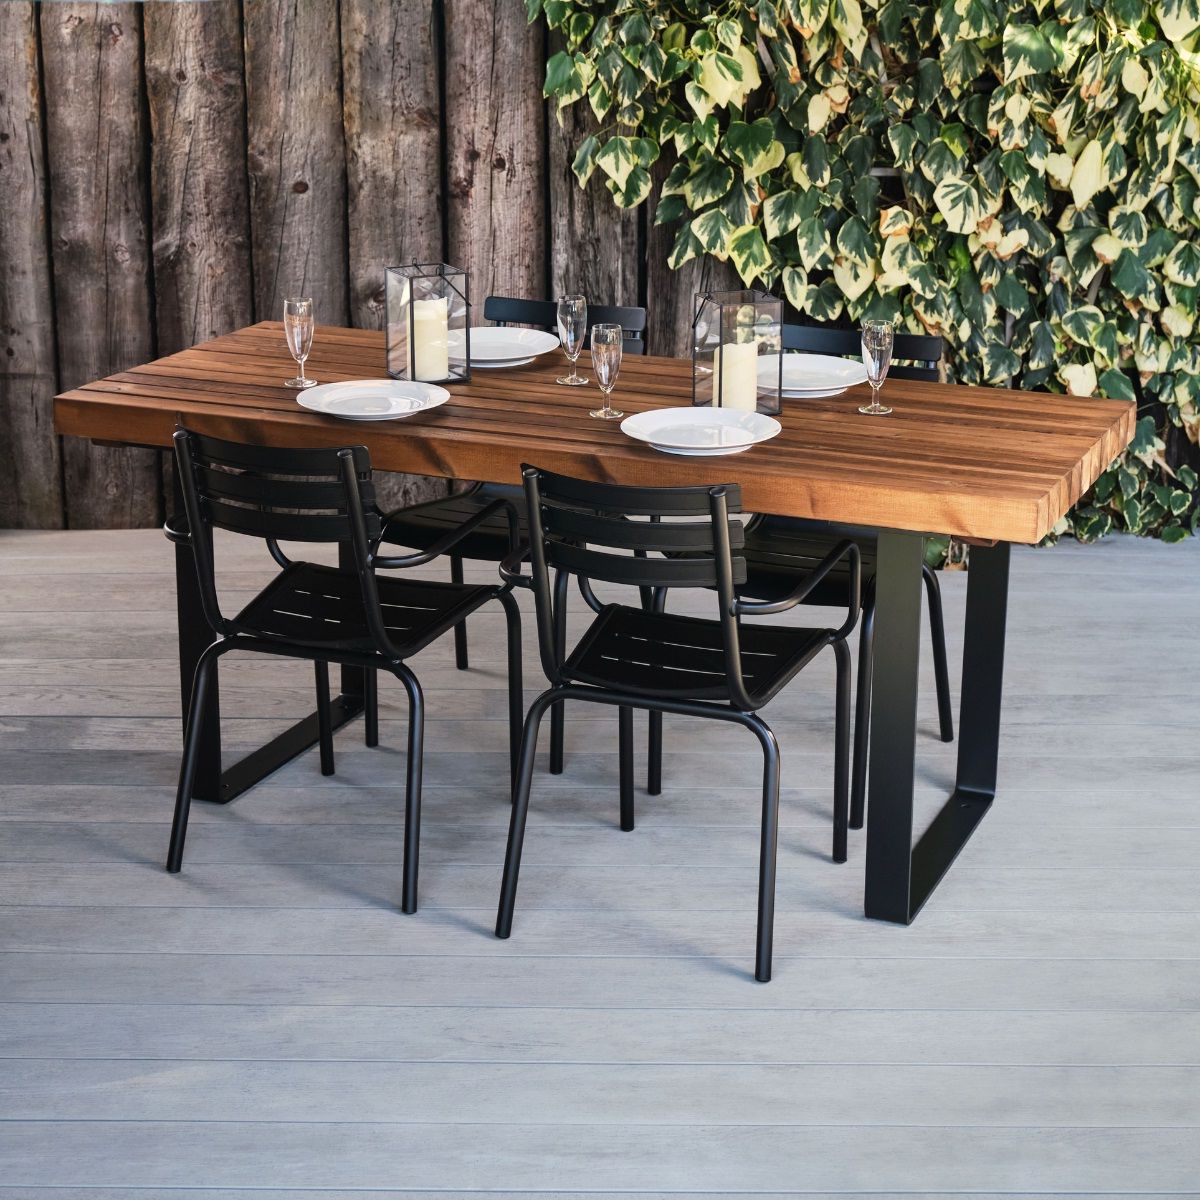 Outdoor Furniture Metal Rectangular Tables Regarding Latest Rectangular Outdoor Table Wood & Steel (View 9 of 15)